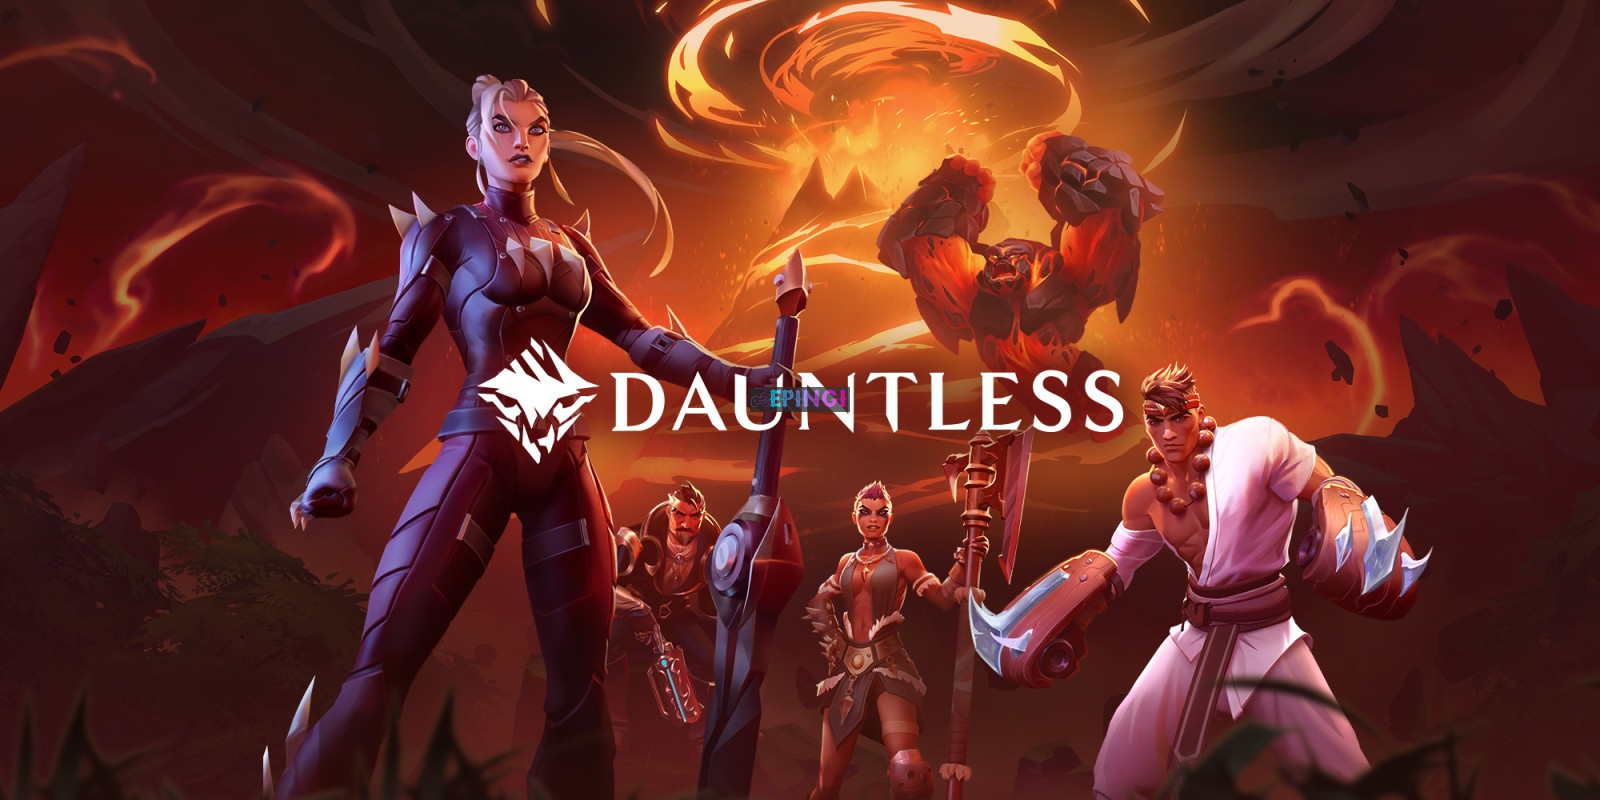 Dauntless iOS/APK Version Full Game Free Download